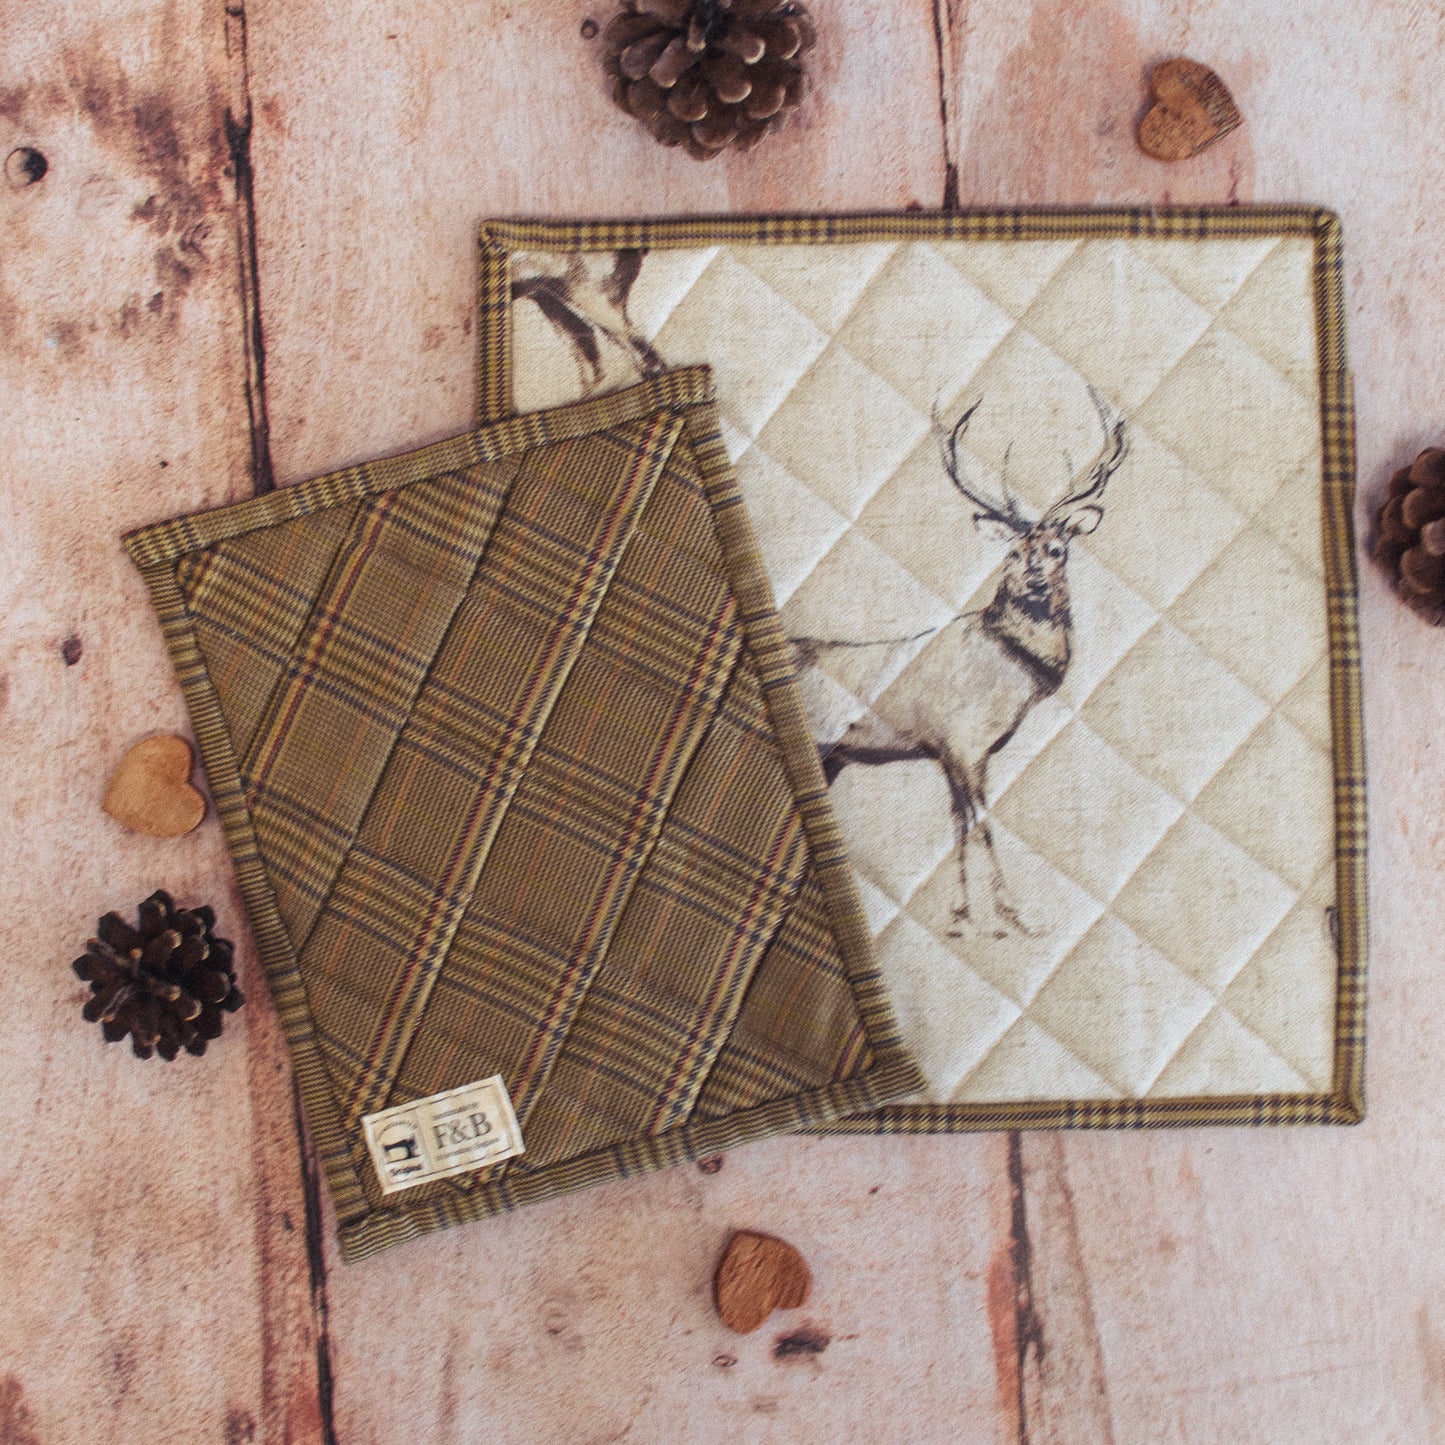 Tartan backed stag print mats - Handmade by F&B Crafts in Malton